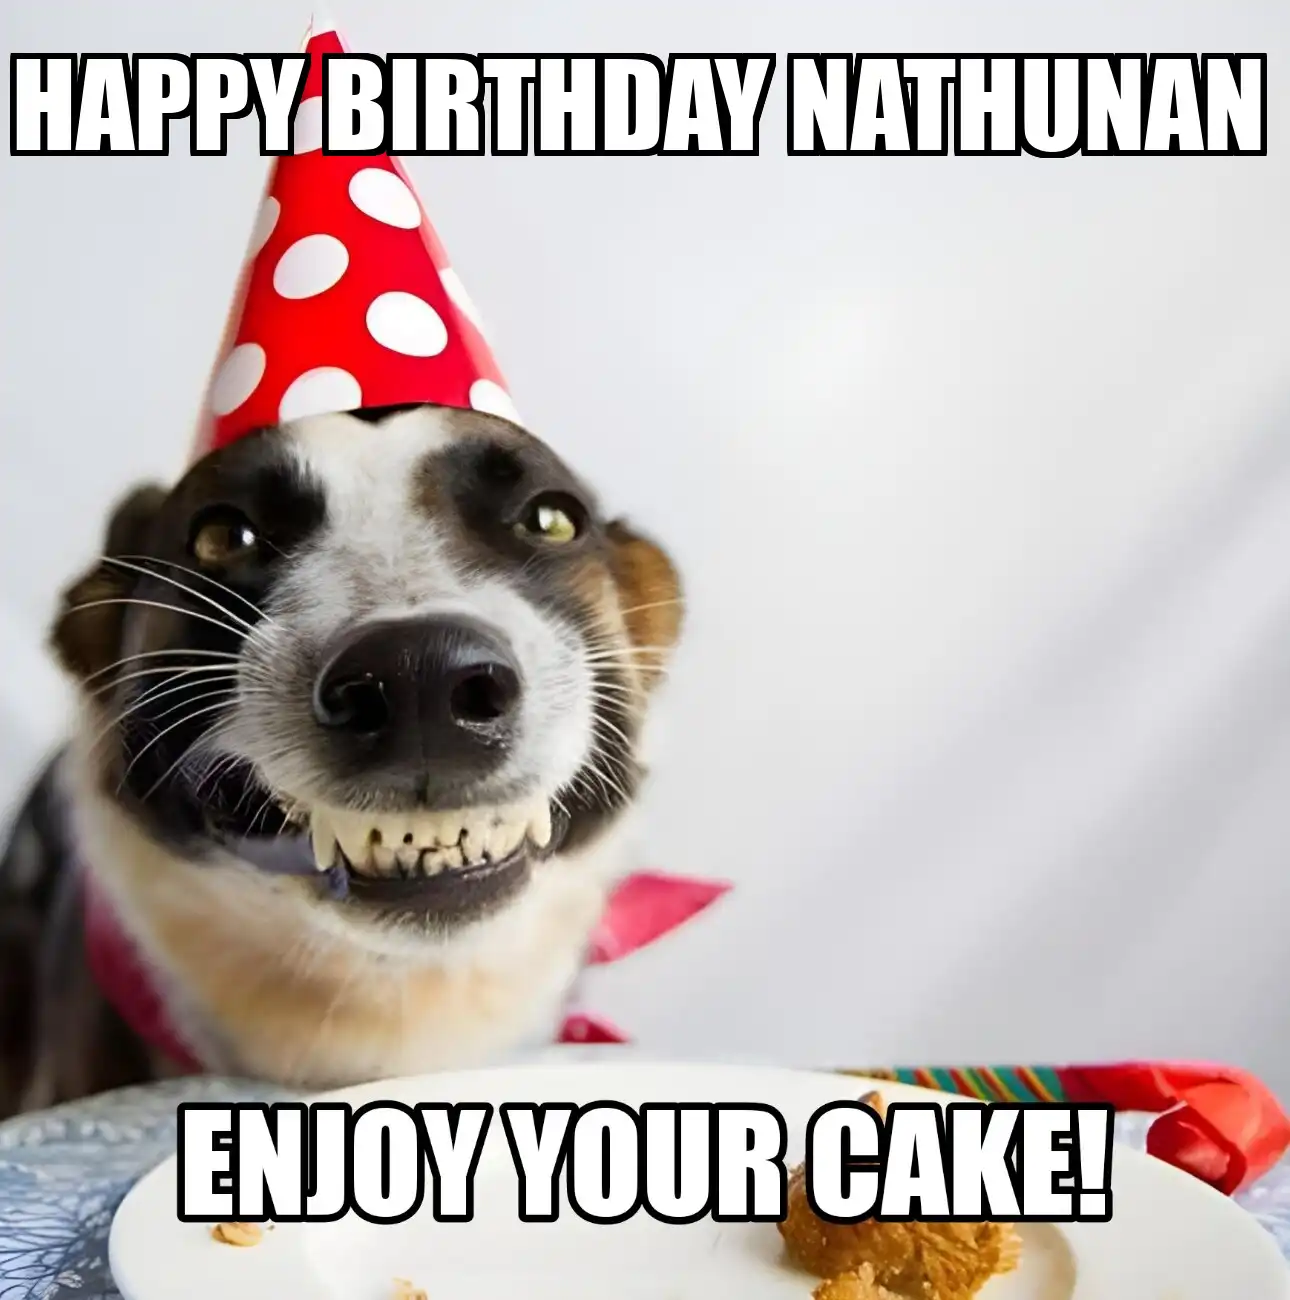 Happy Birthday Nathunan Enjoy Your Cake Dog Meme